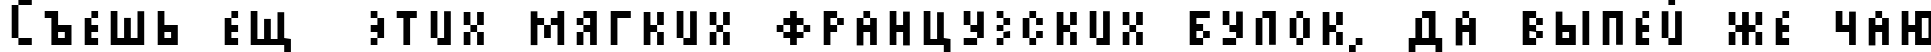 Пример написания шрифтом AuX DotBitC Cond SmallCaps текста на русском